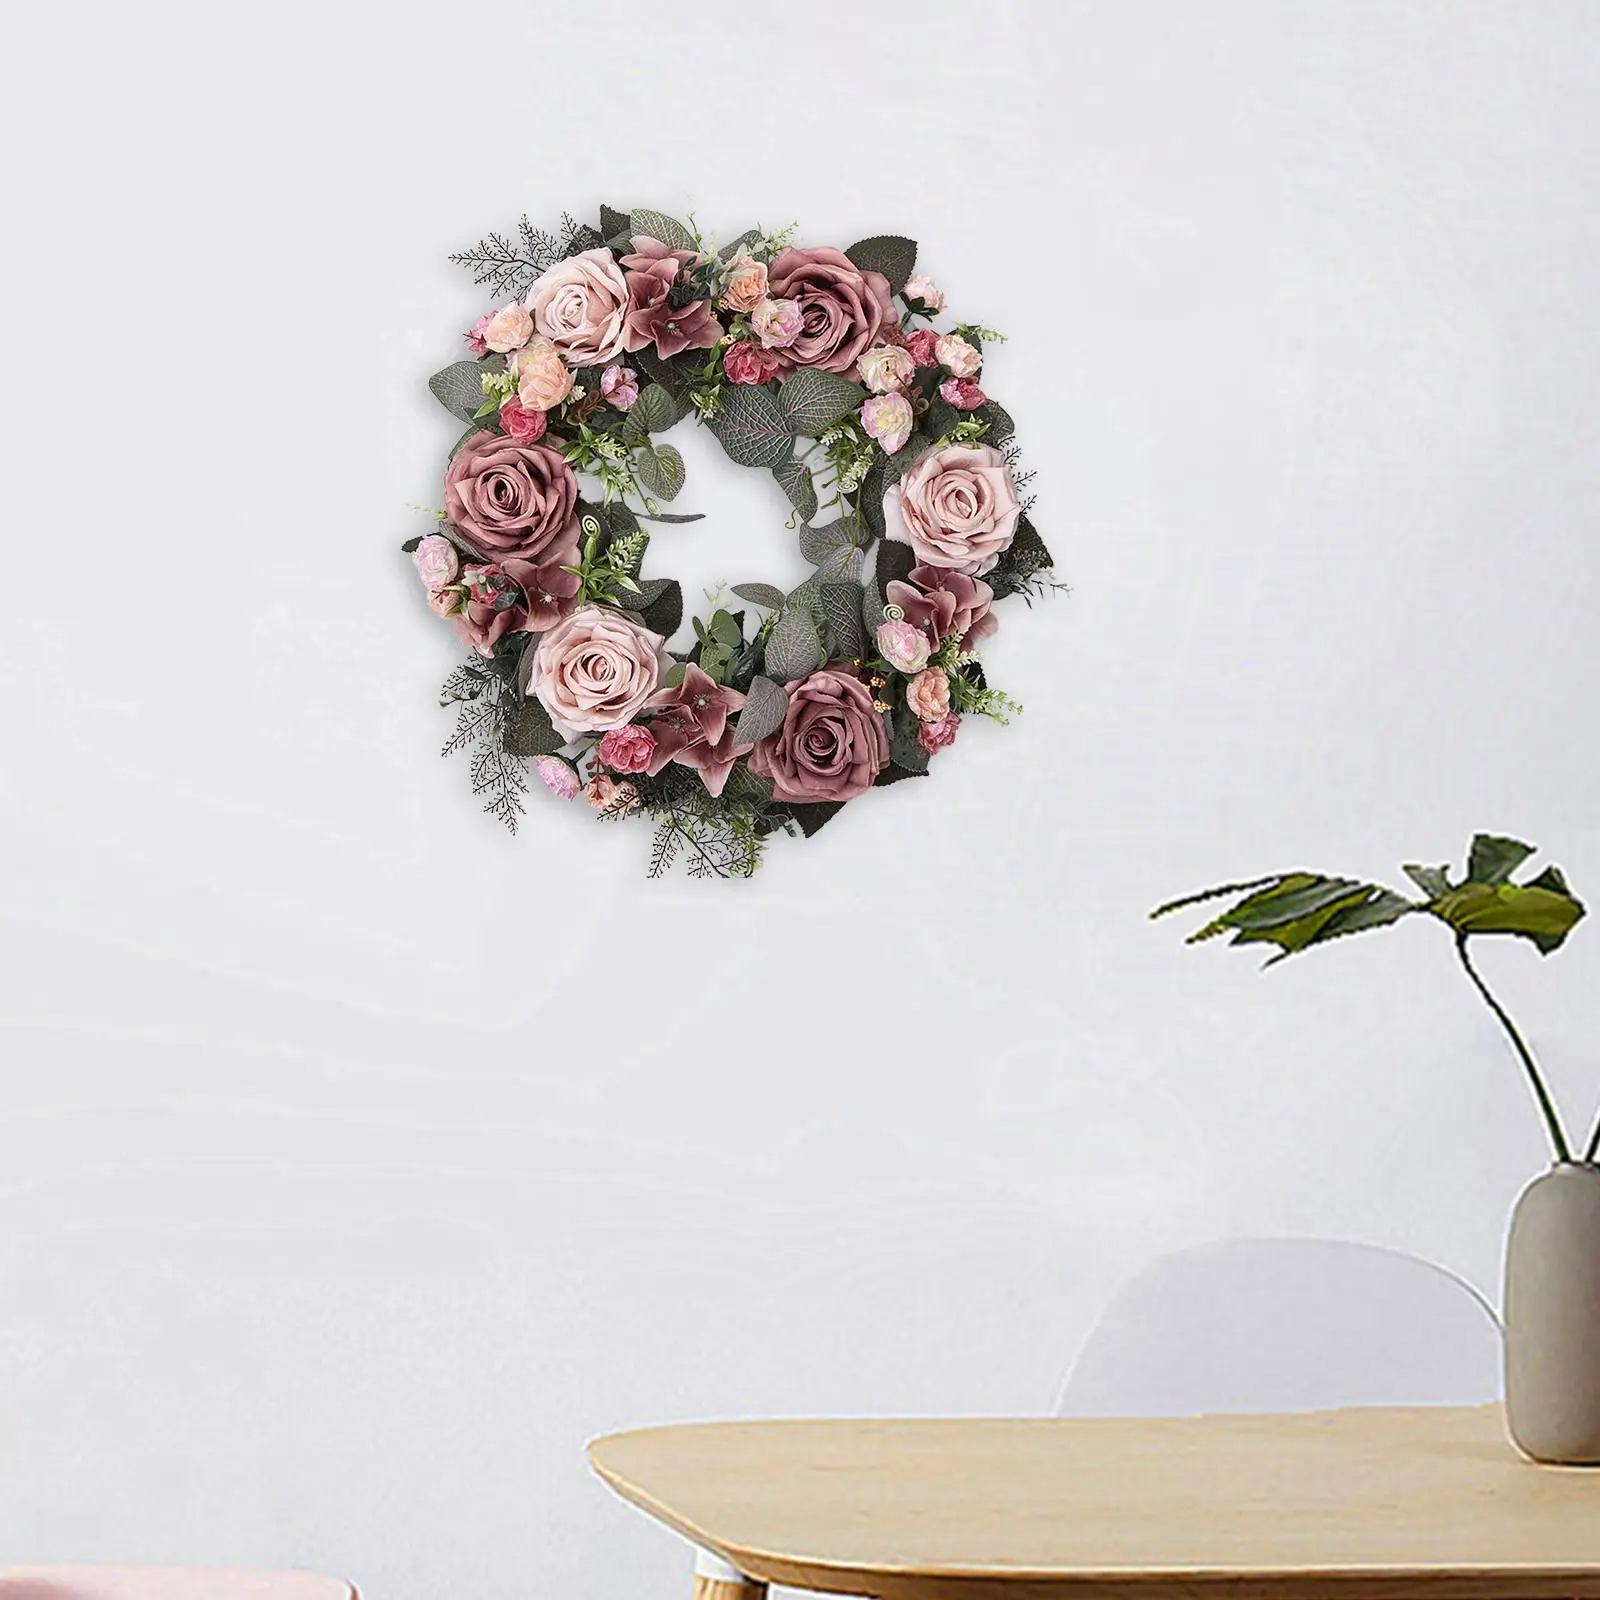 45cm Artificial Wreath Floral Swag Garland Hanging Wreath Arrangements Flower Wreath for Wedding Wall Decor Ornament